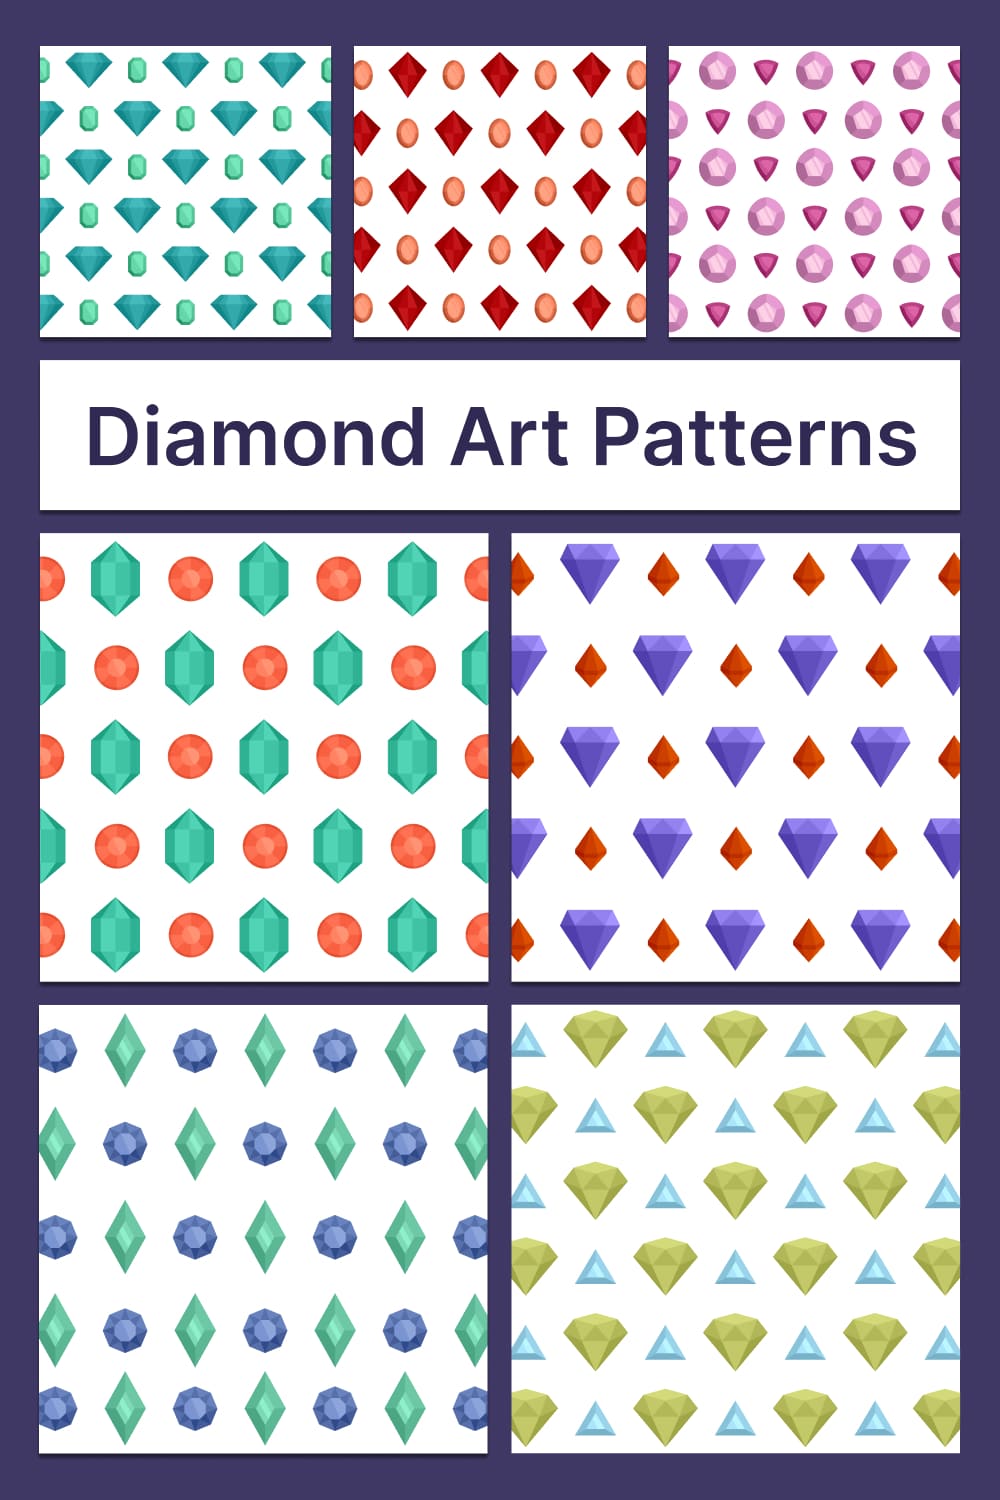 Colorful diamond patterns.